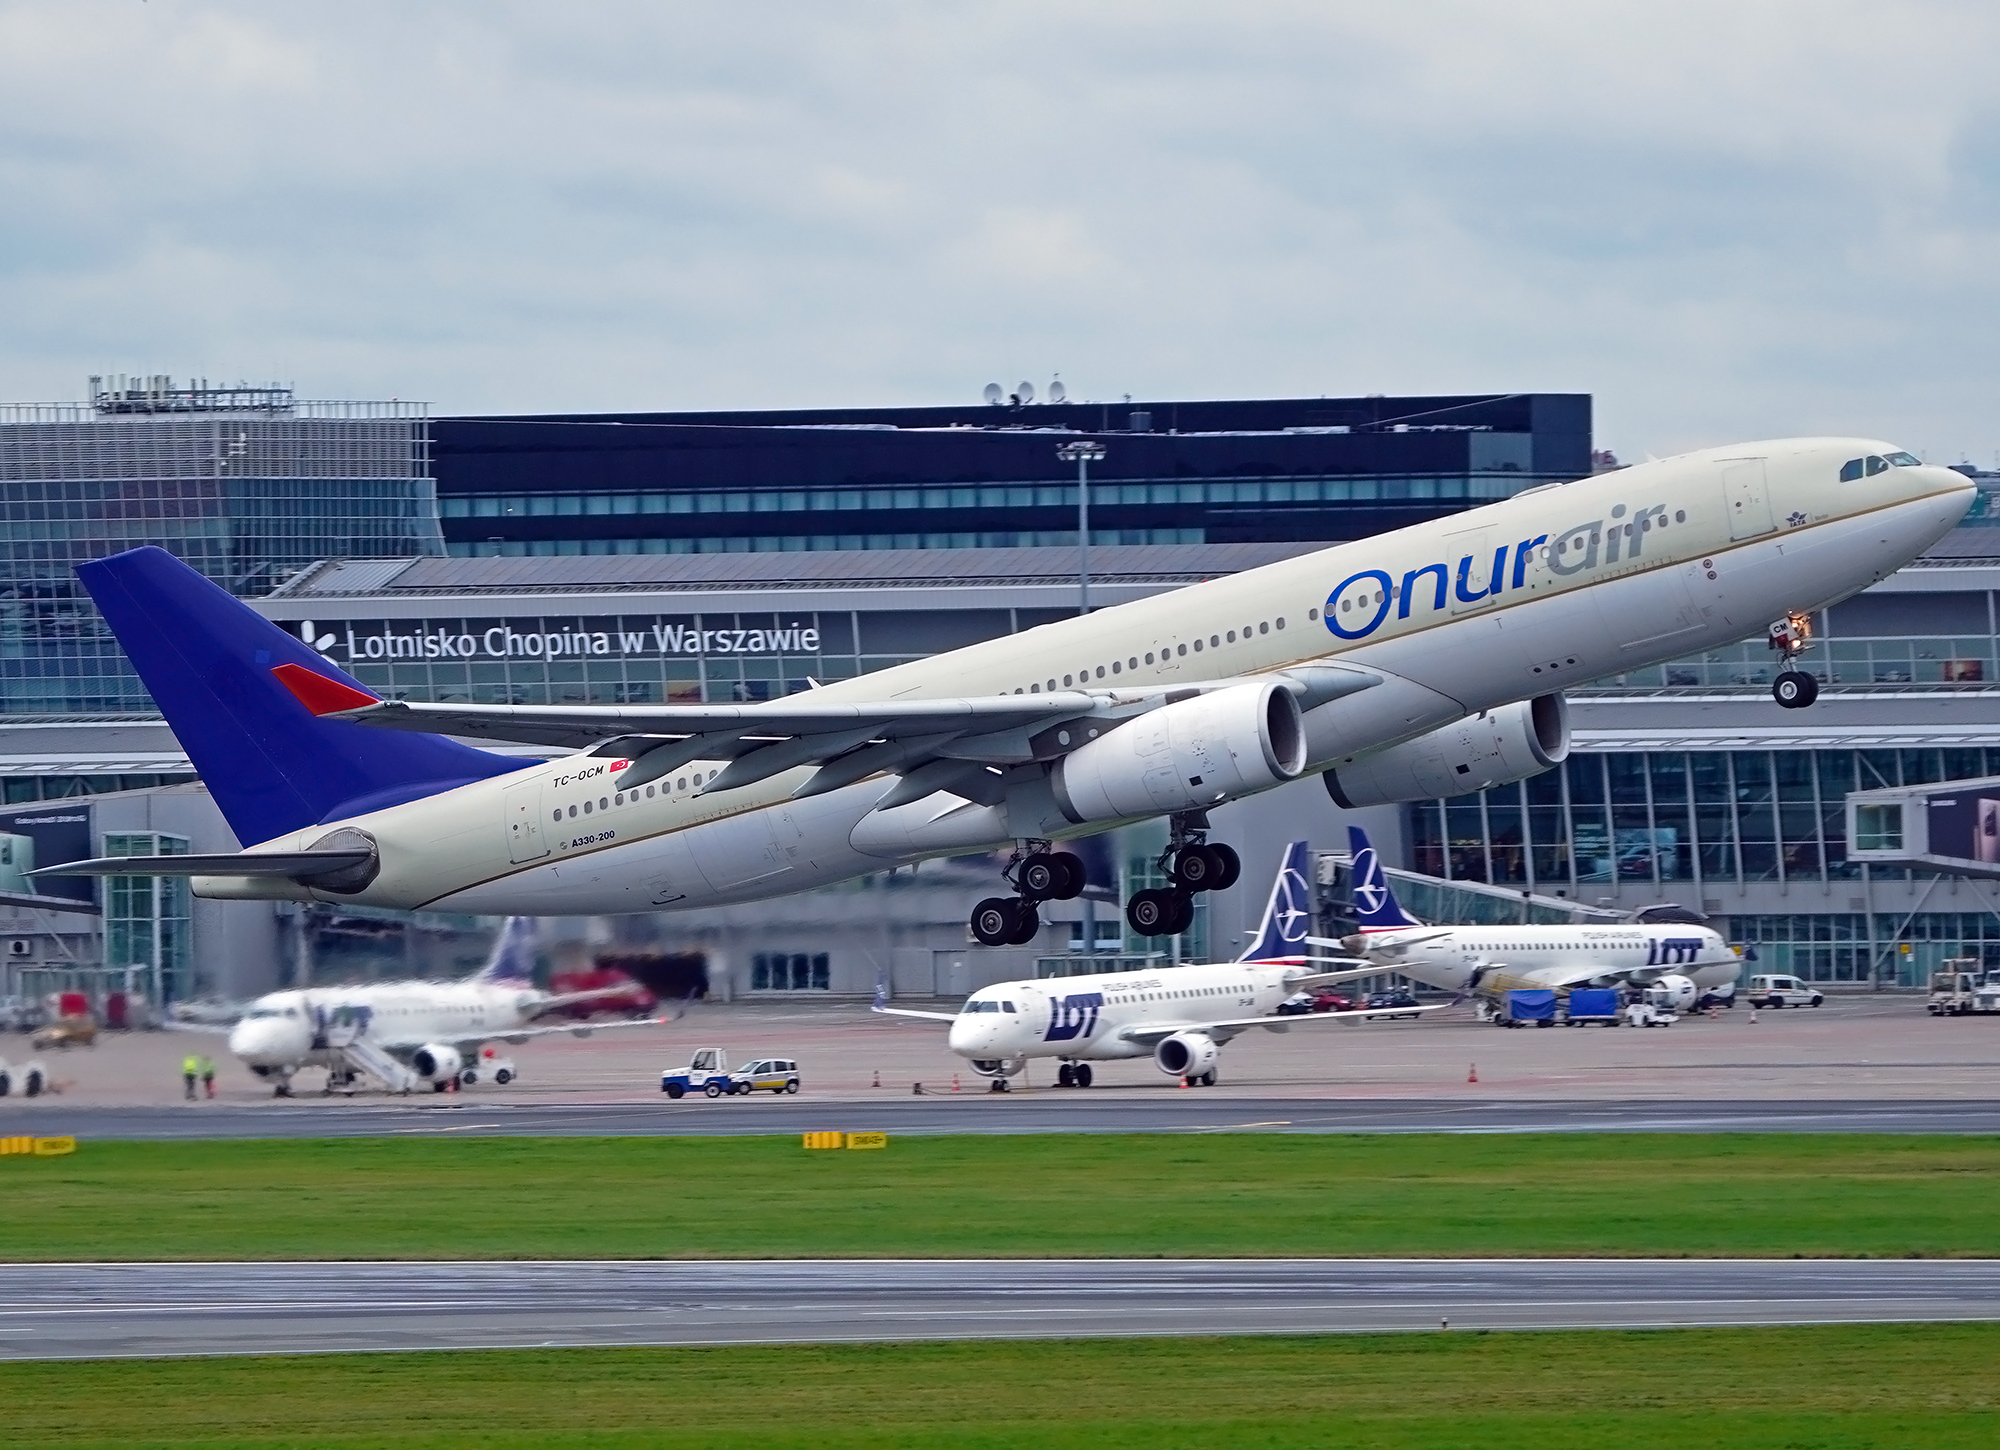 Samolot A330 linii Onur Air startujący z Lotniska Chopina Fot. Piotr Bożyk-PAŻP